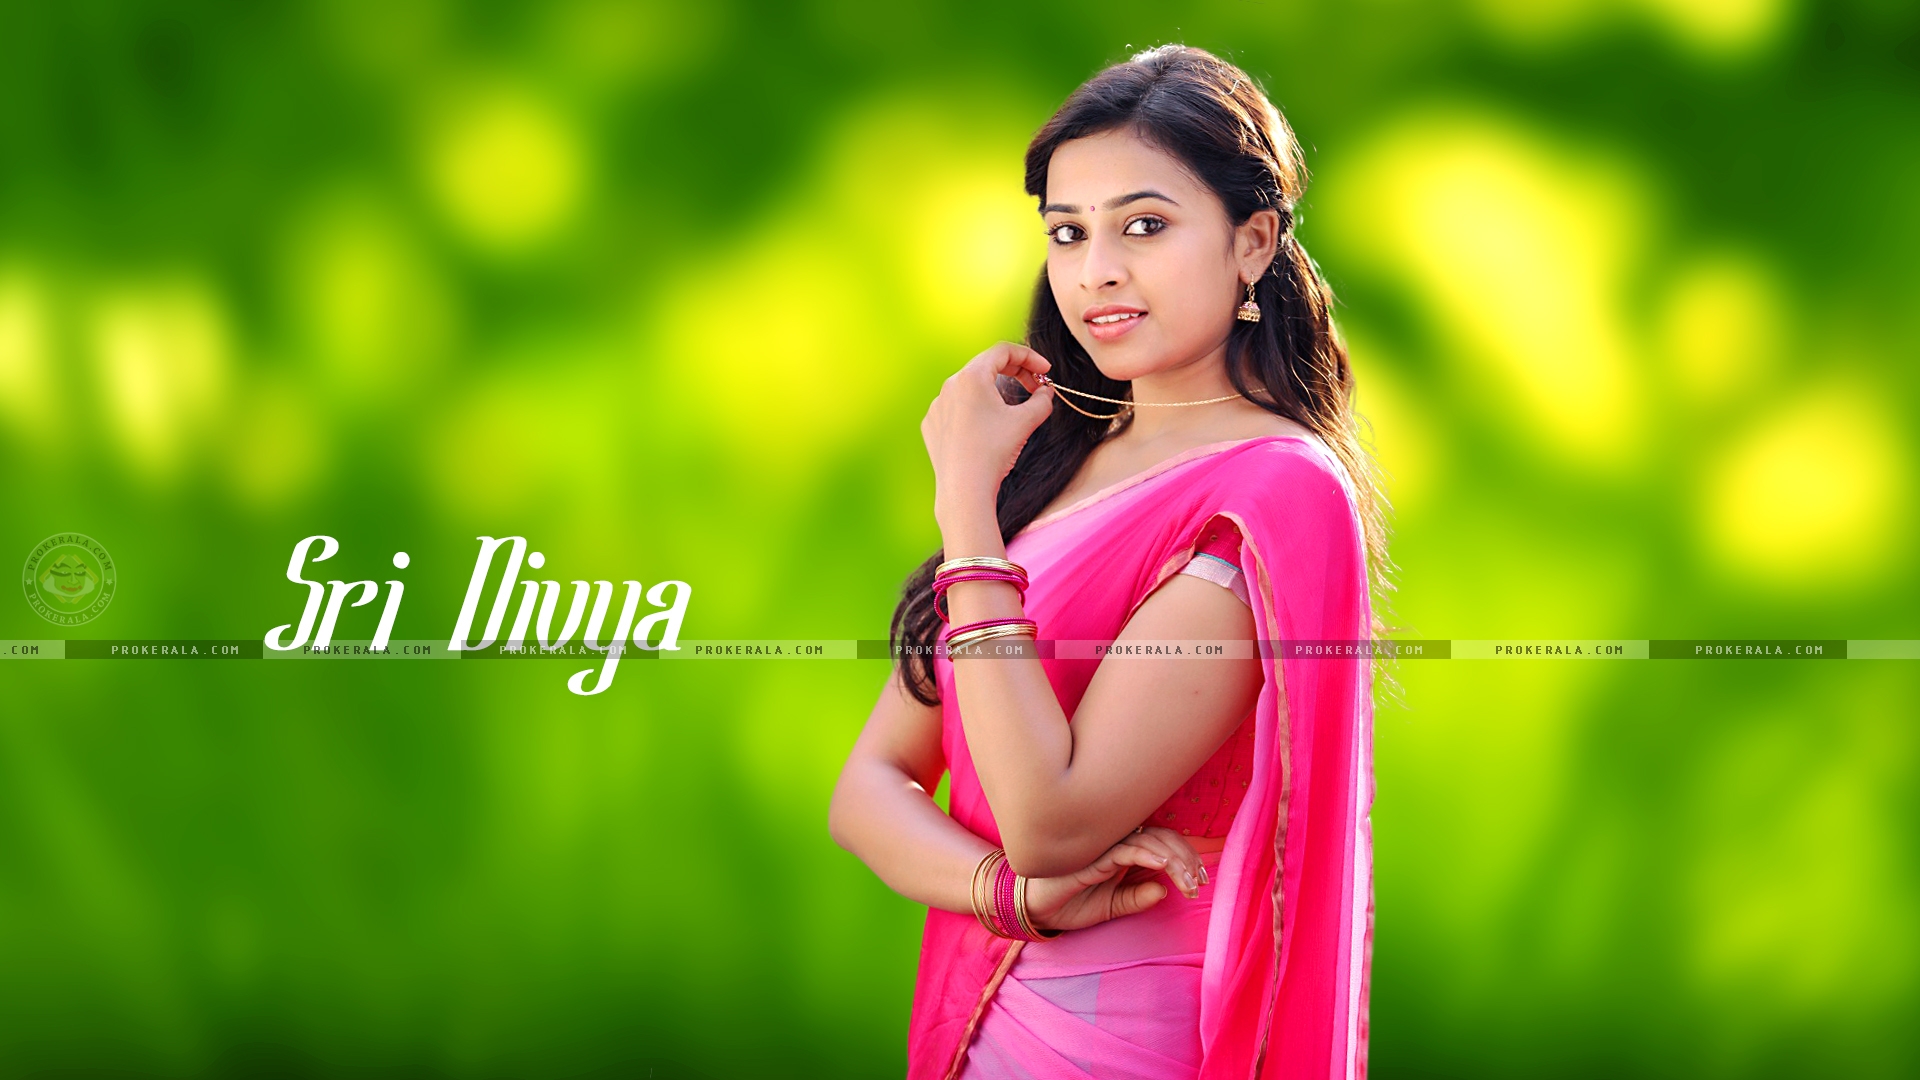 sri divya wallpaper download,people in nature,green,pink,beauty,photo shoot